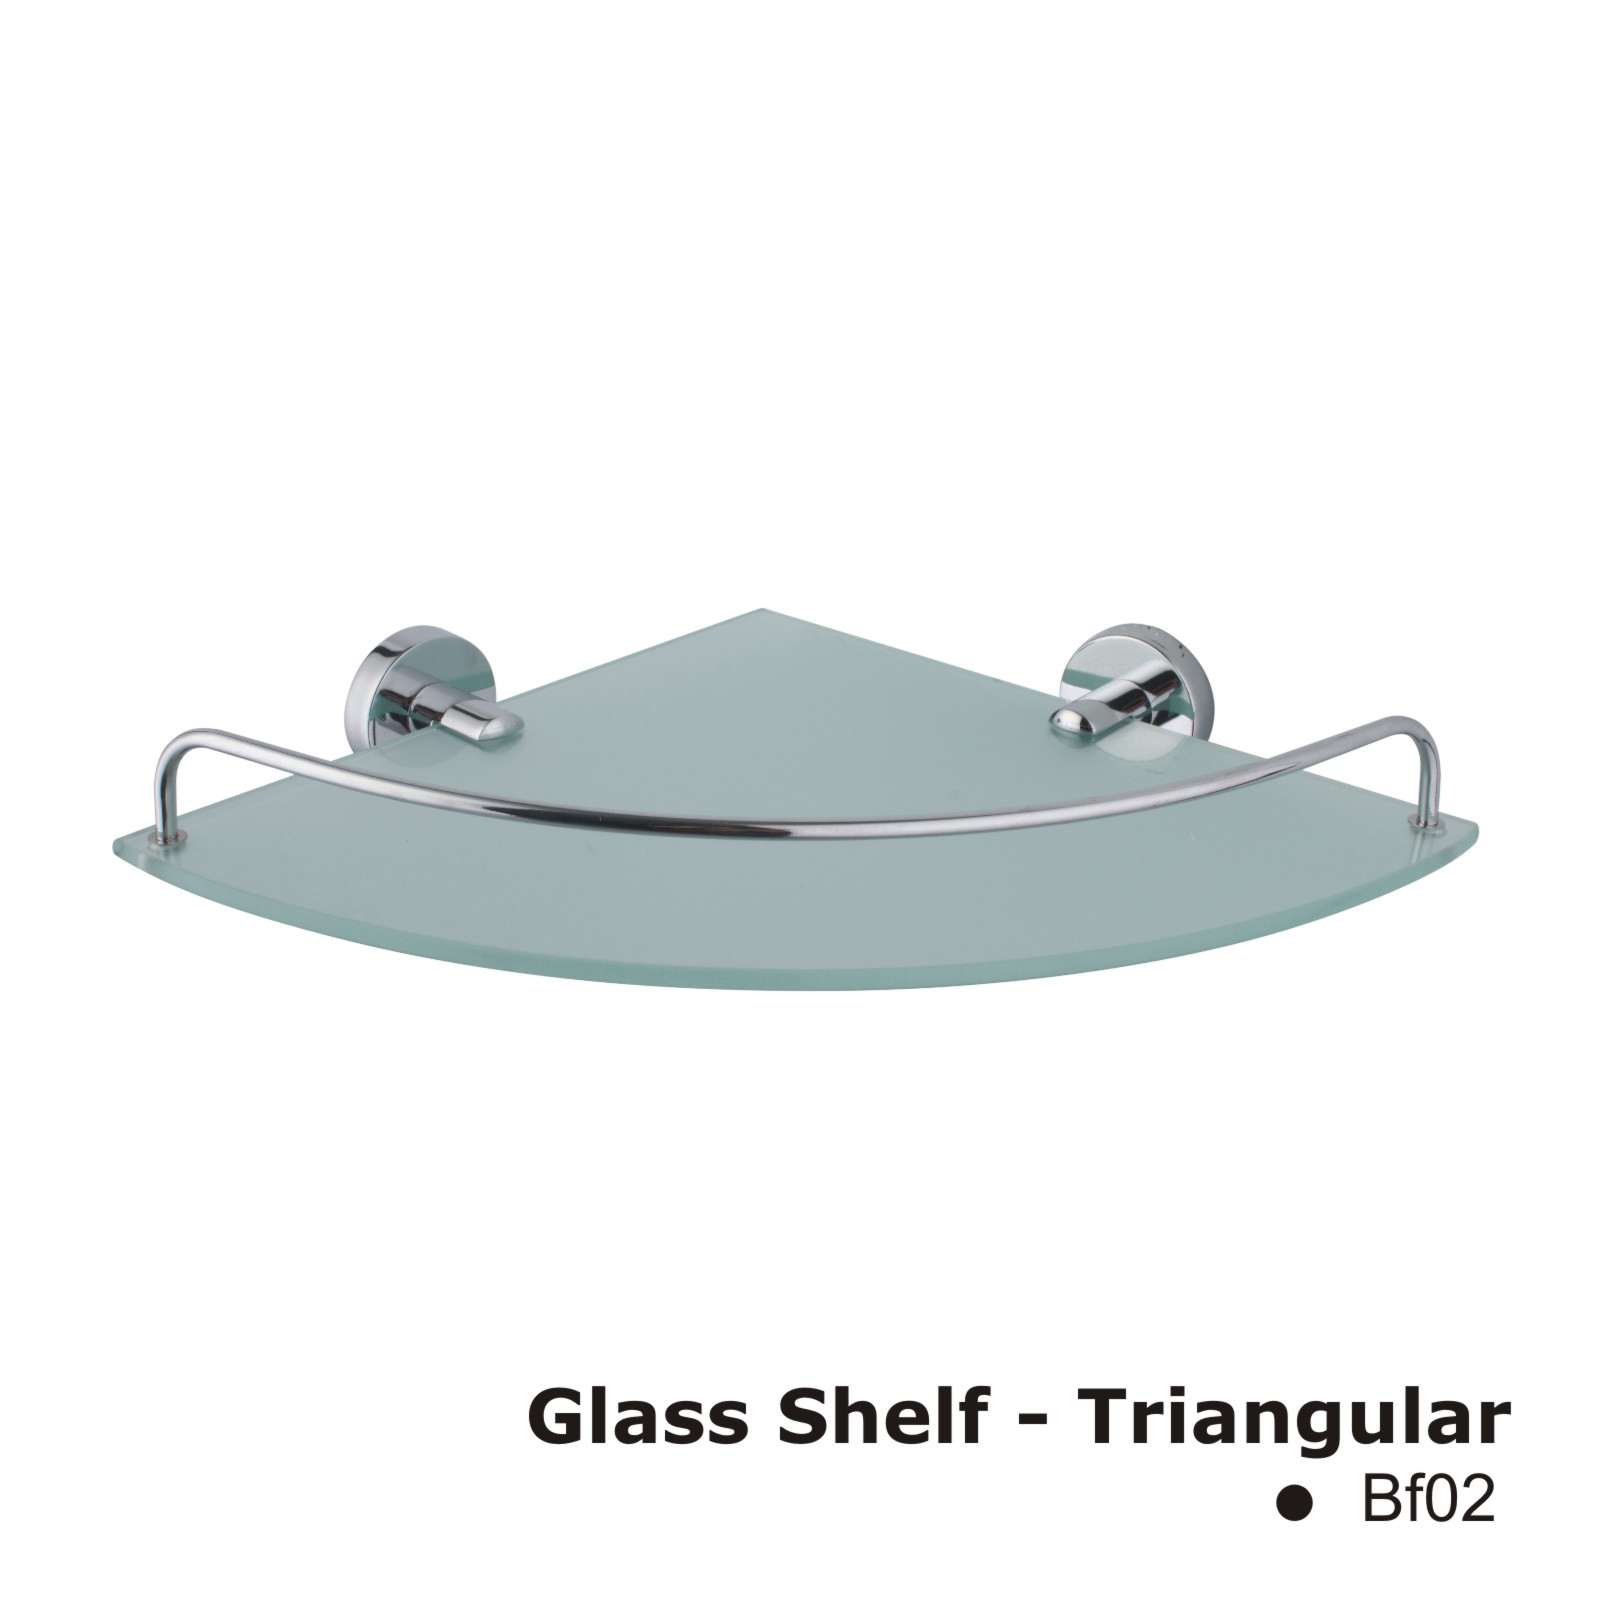 Glass Shelf - Triangular